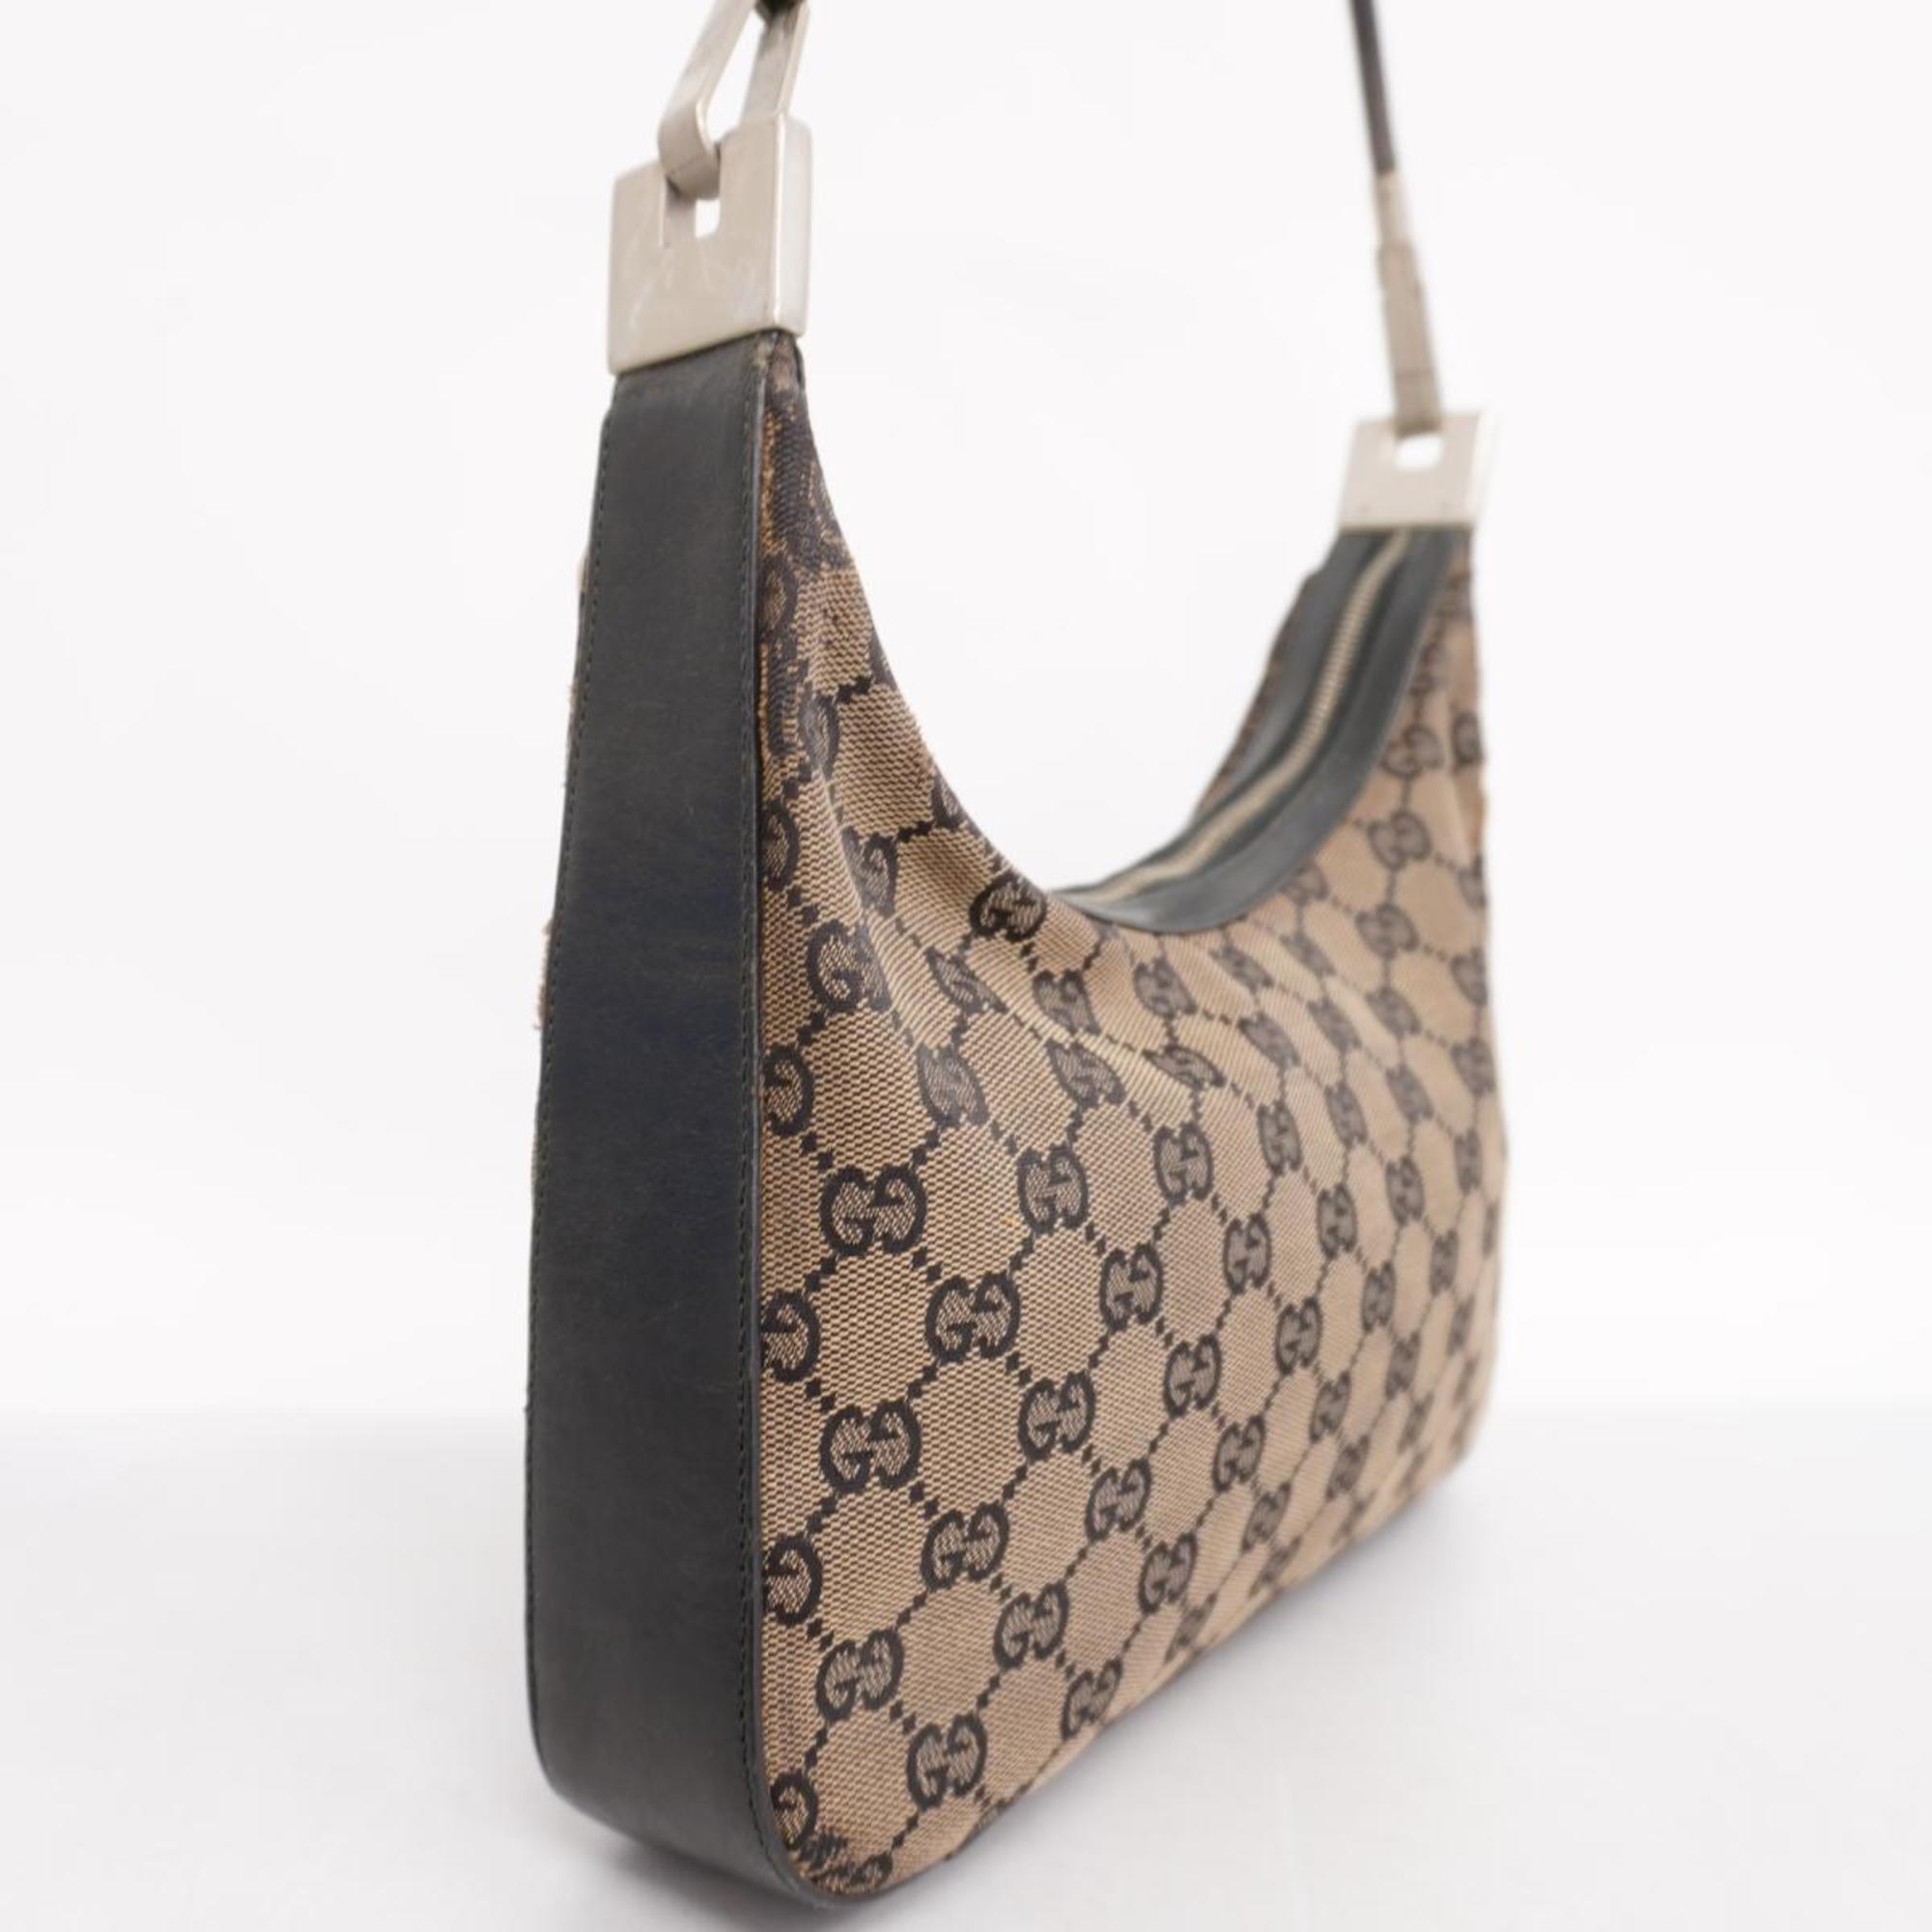 Gucci Shoulder Bag GG Canvas 001 3812 Leather Black Women's